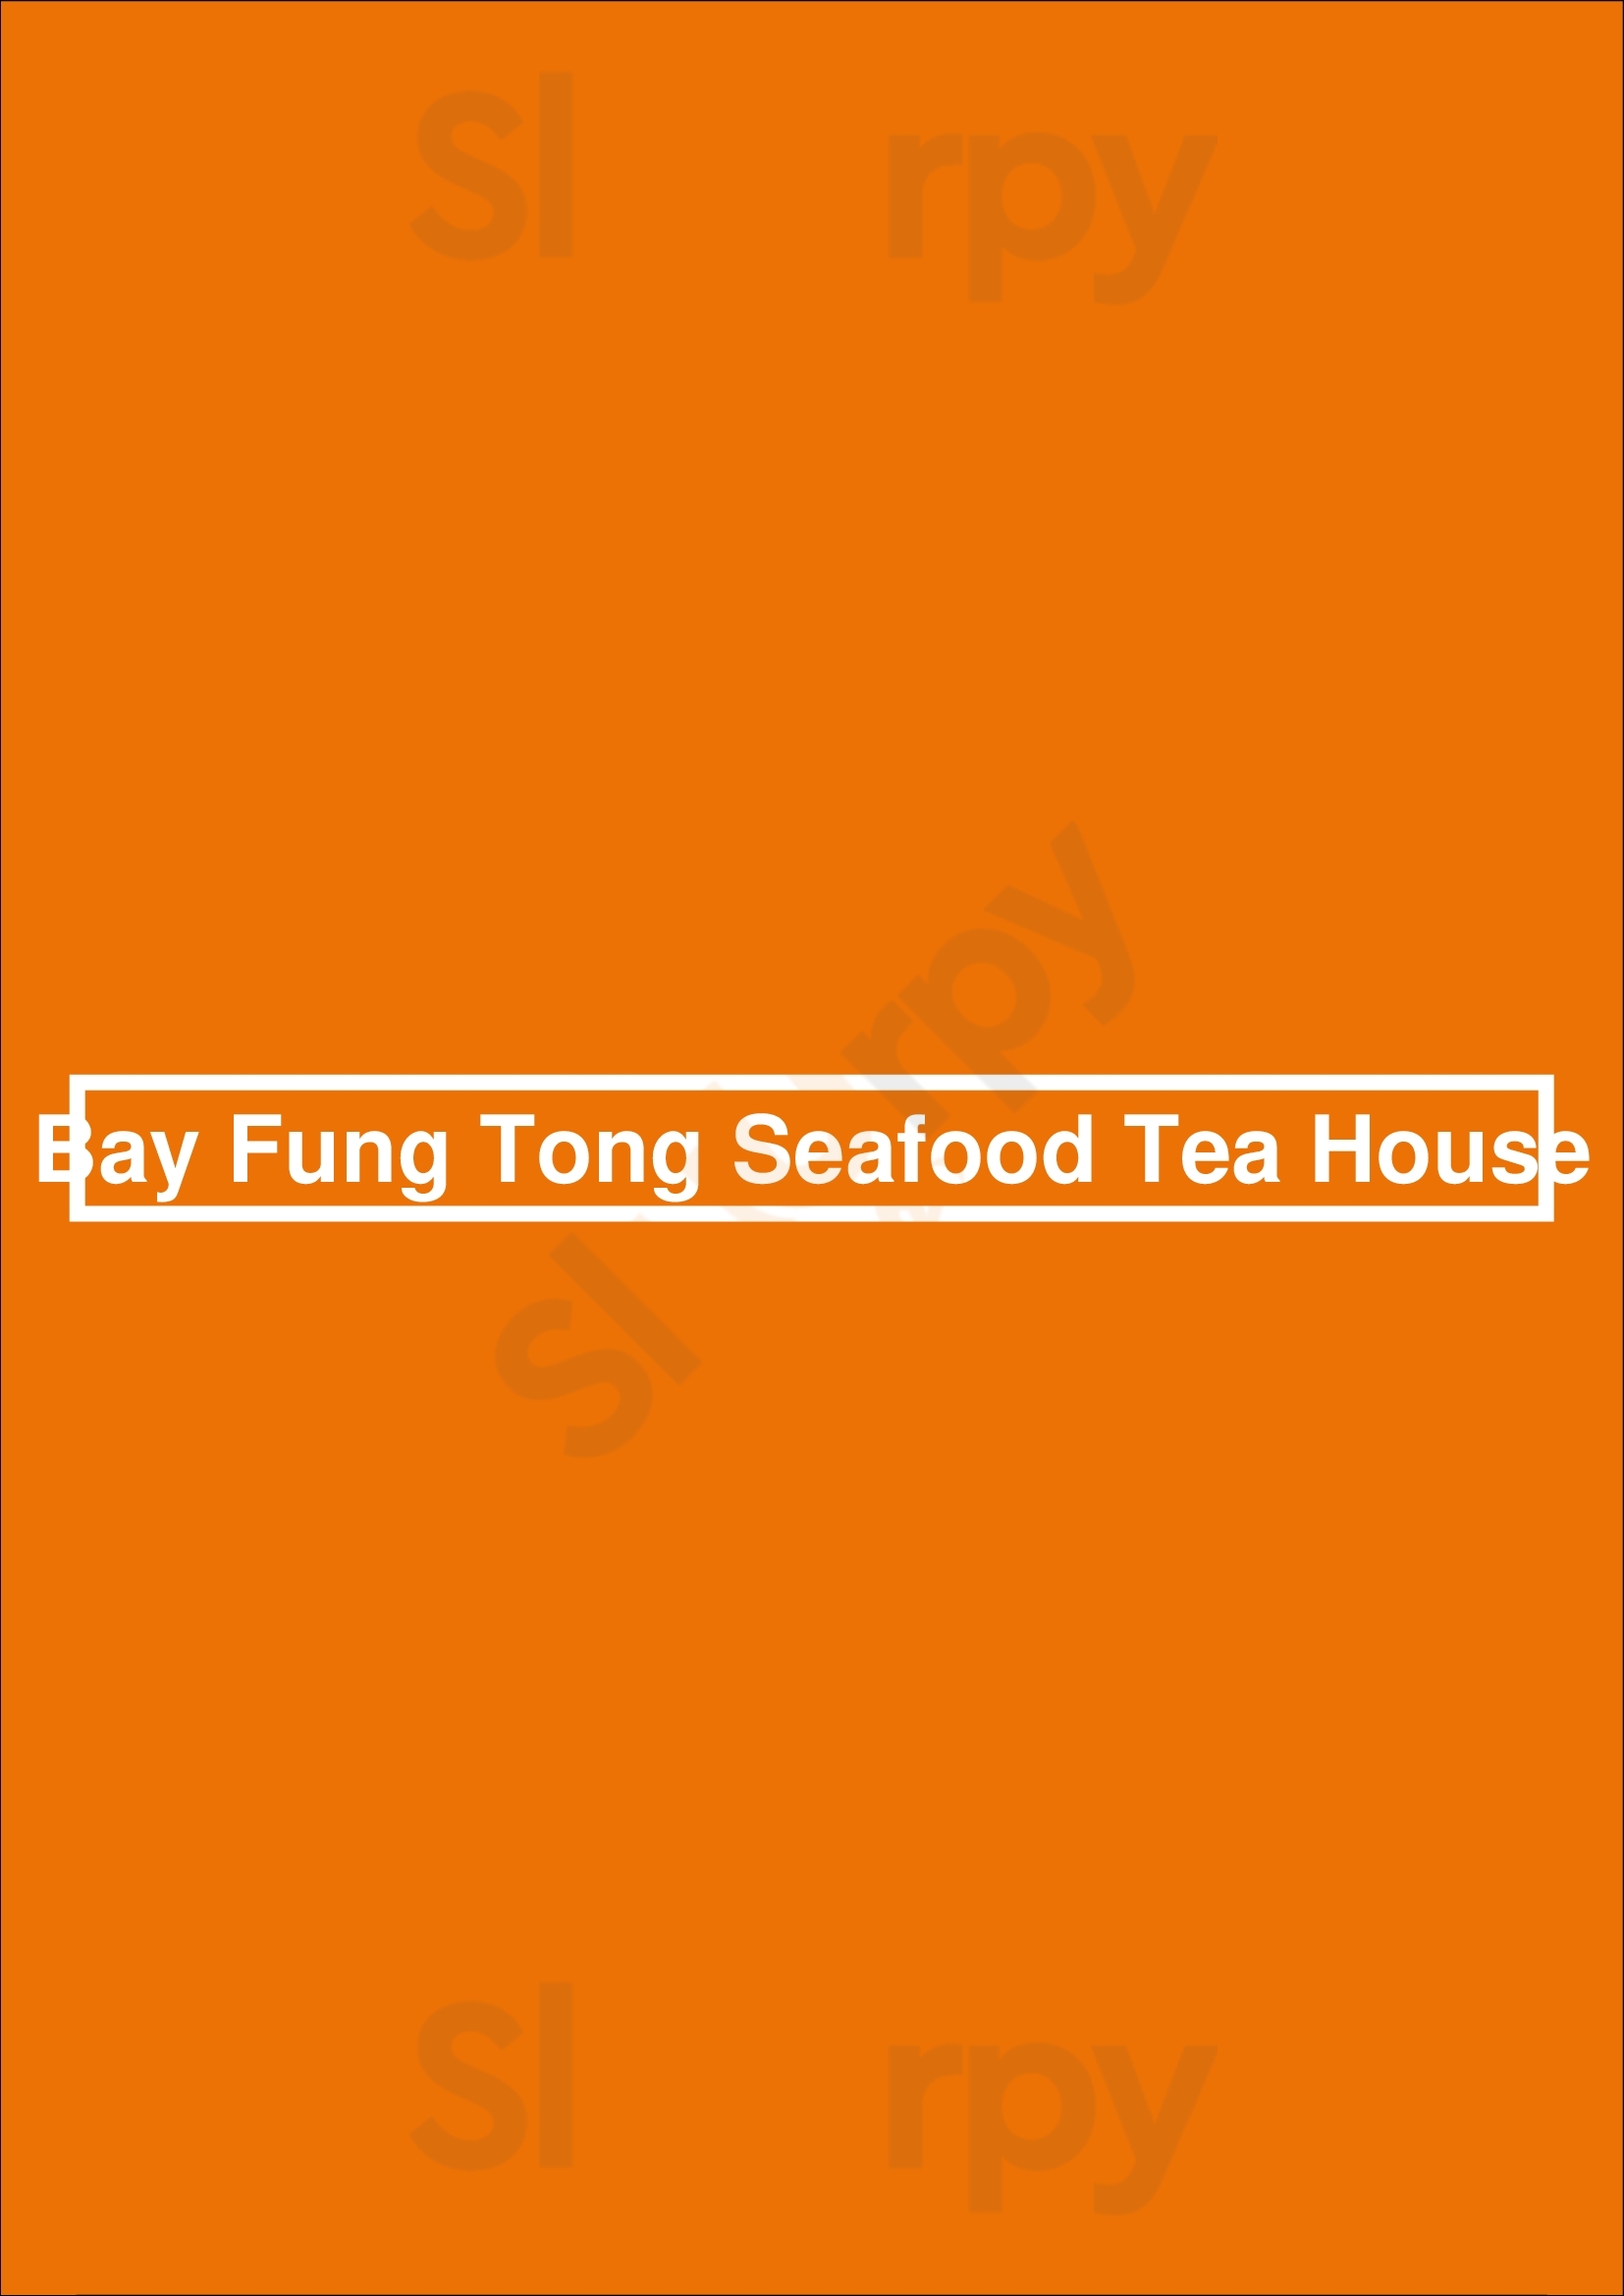 Bay Fung Tong Seafood Tea House Oakland Menu - 1